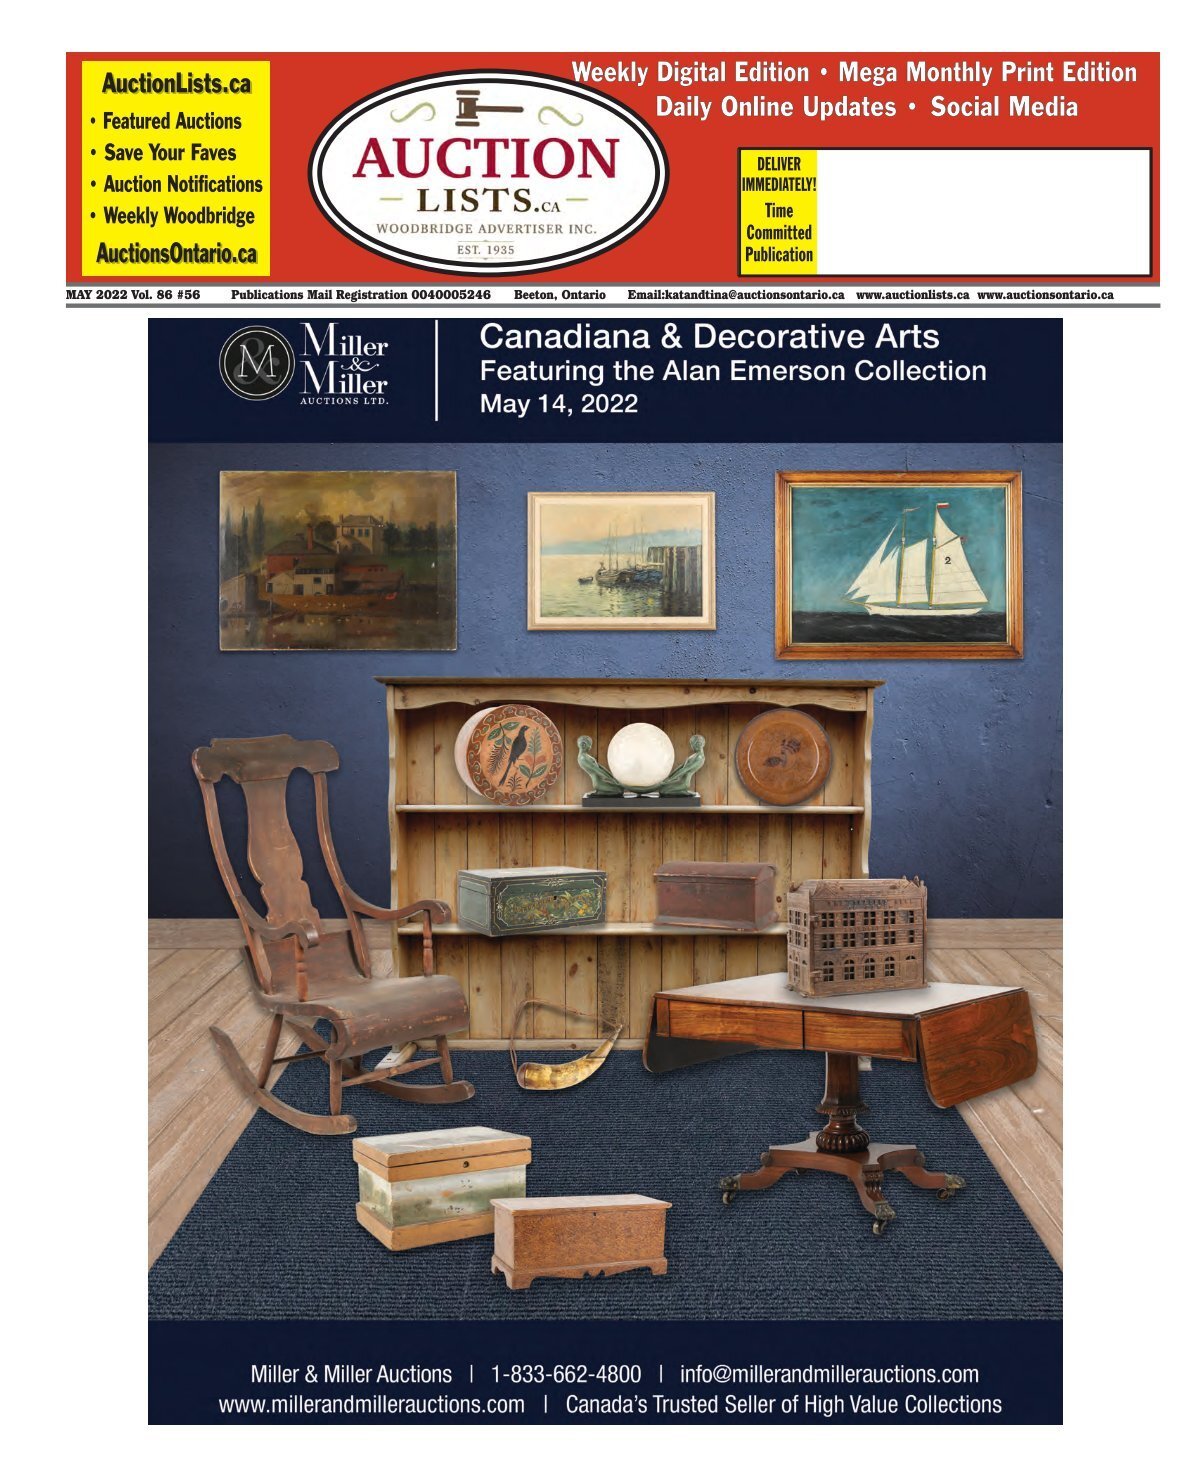 Woodbridge Advertiser/AuctionLists.ca - 2022-05-02